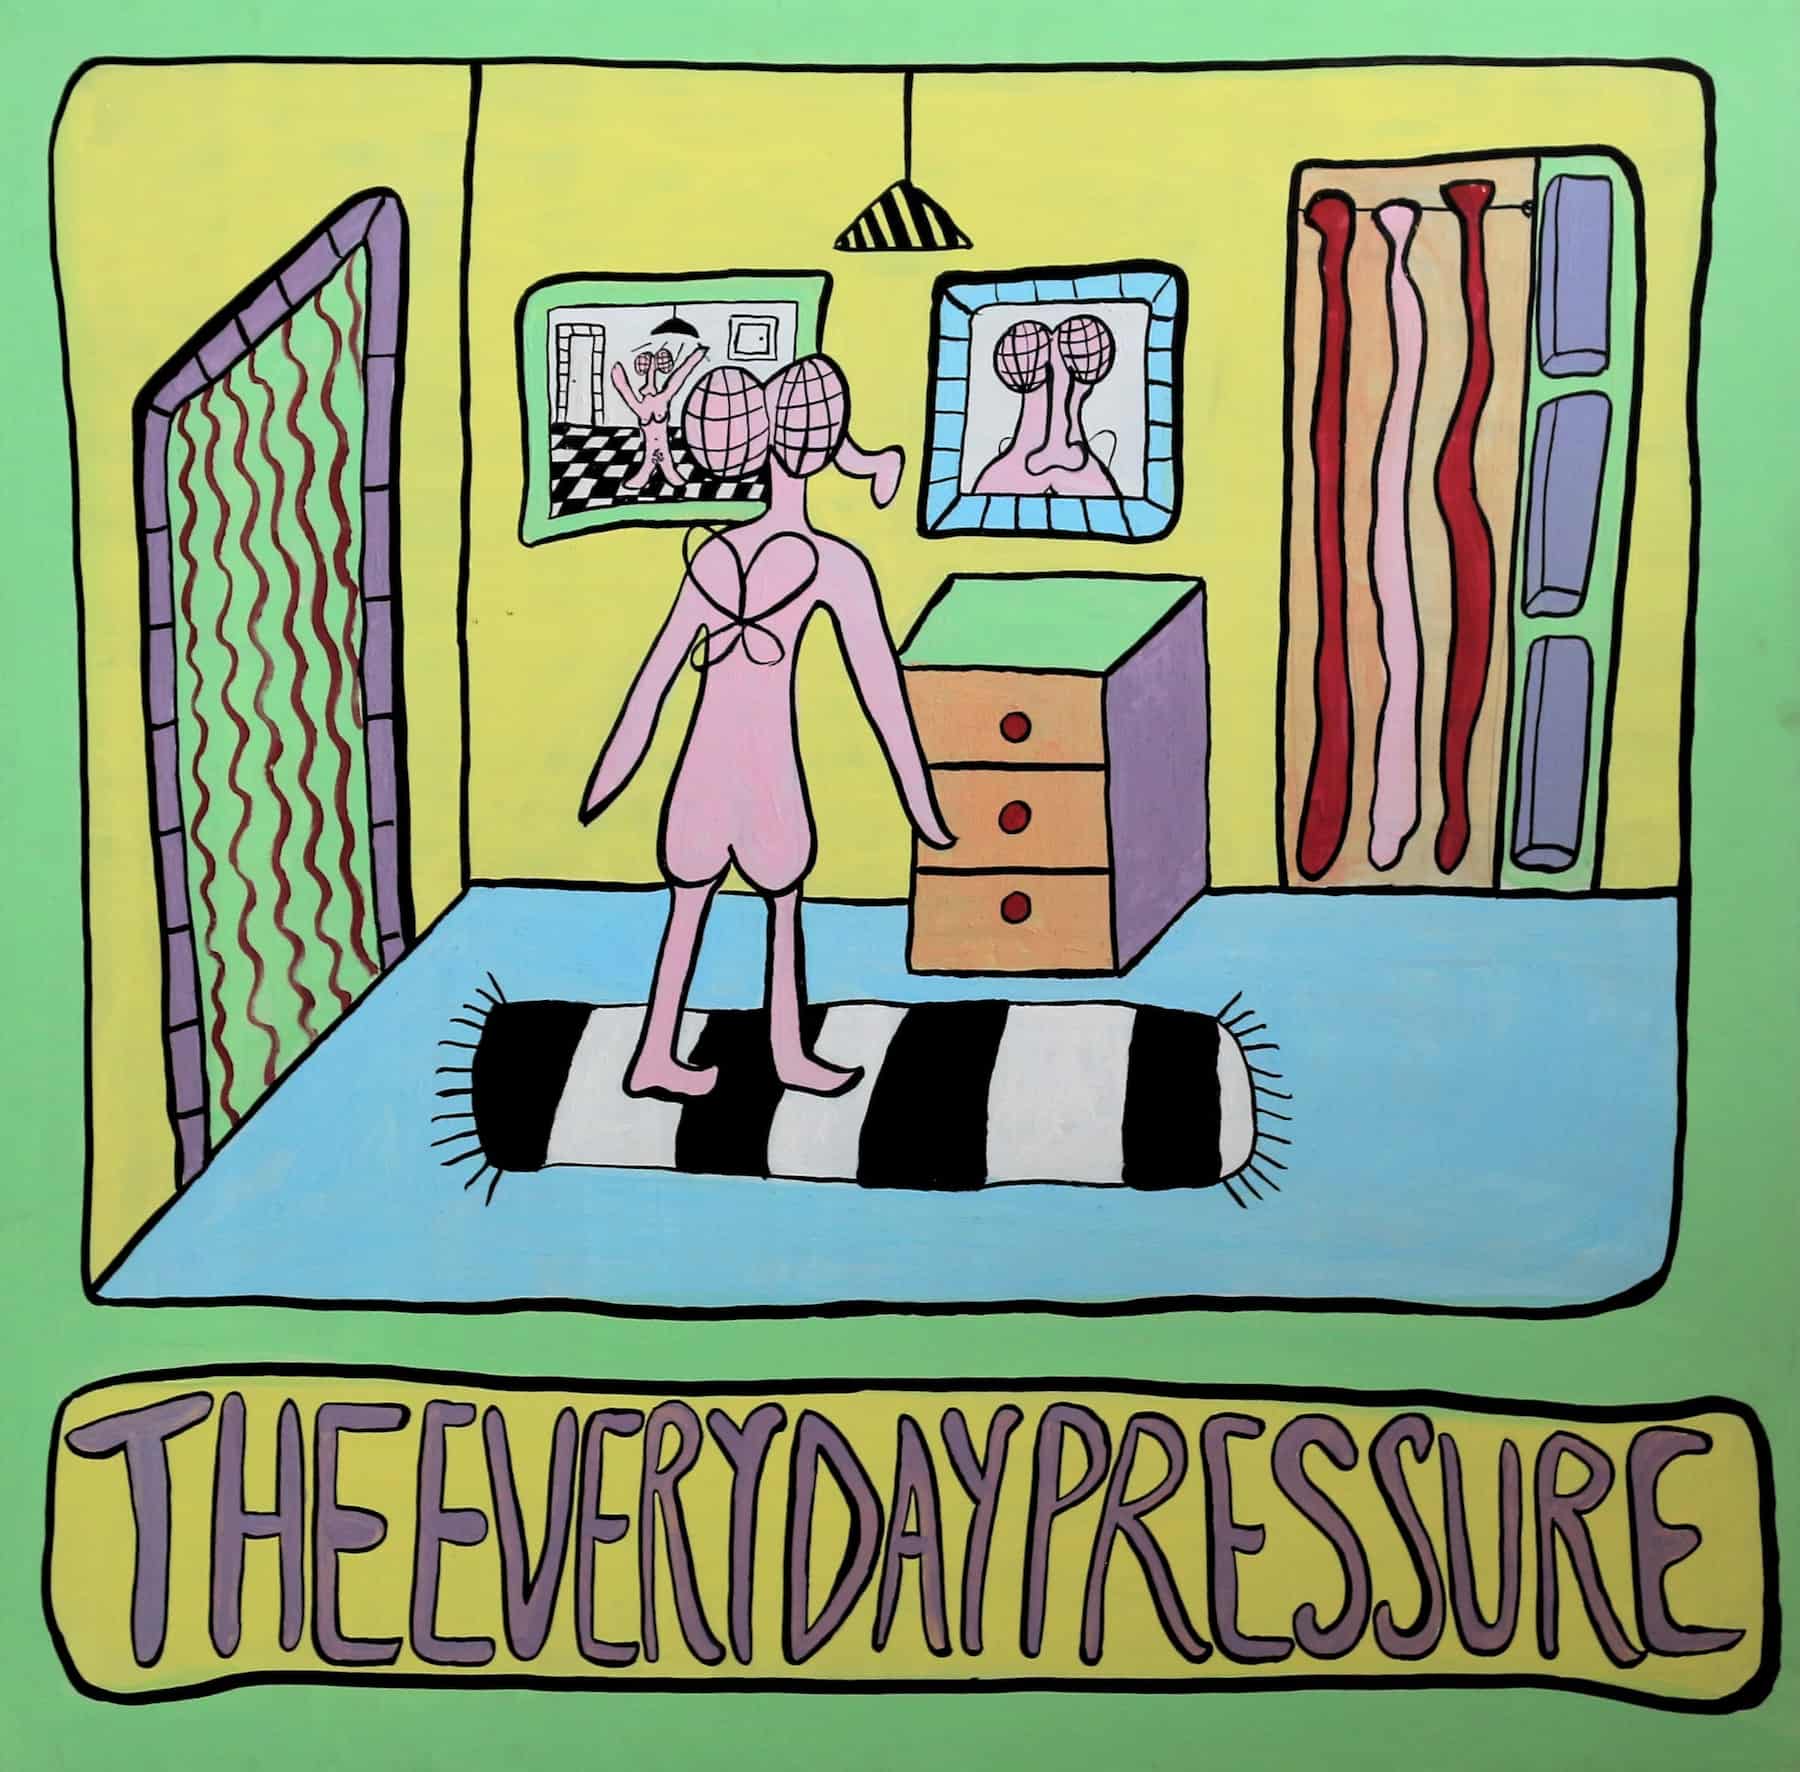 The everyday pressure, acryl auf leinwand, 90 x90 cm, 2019